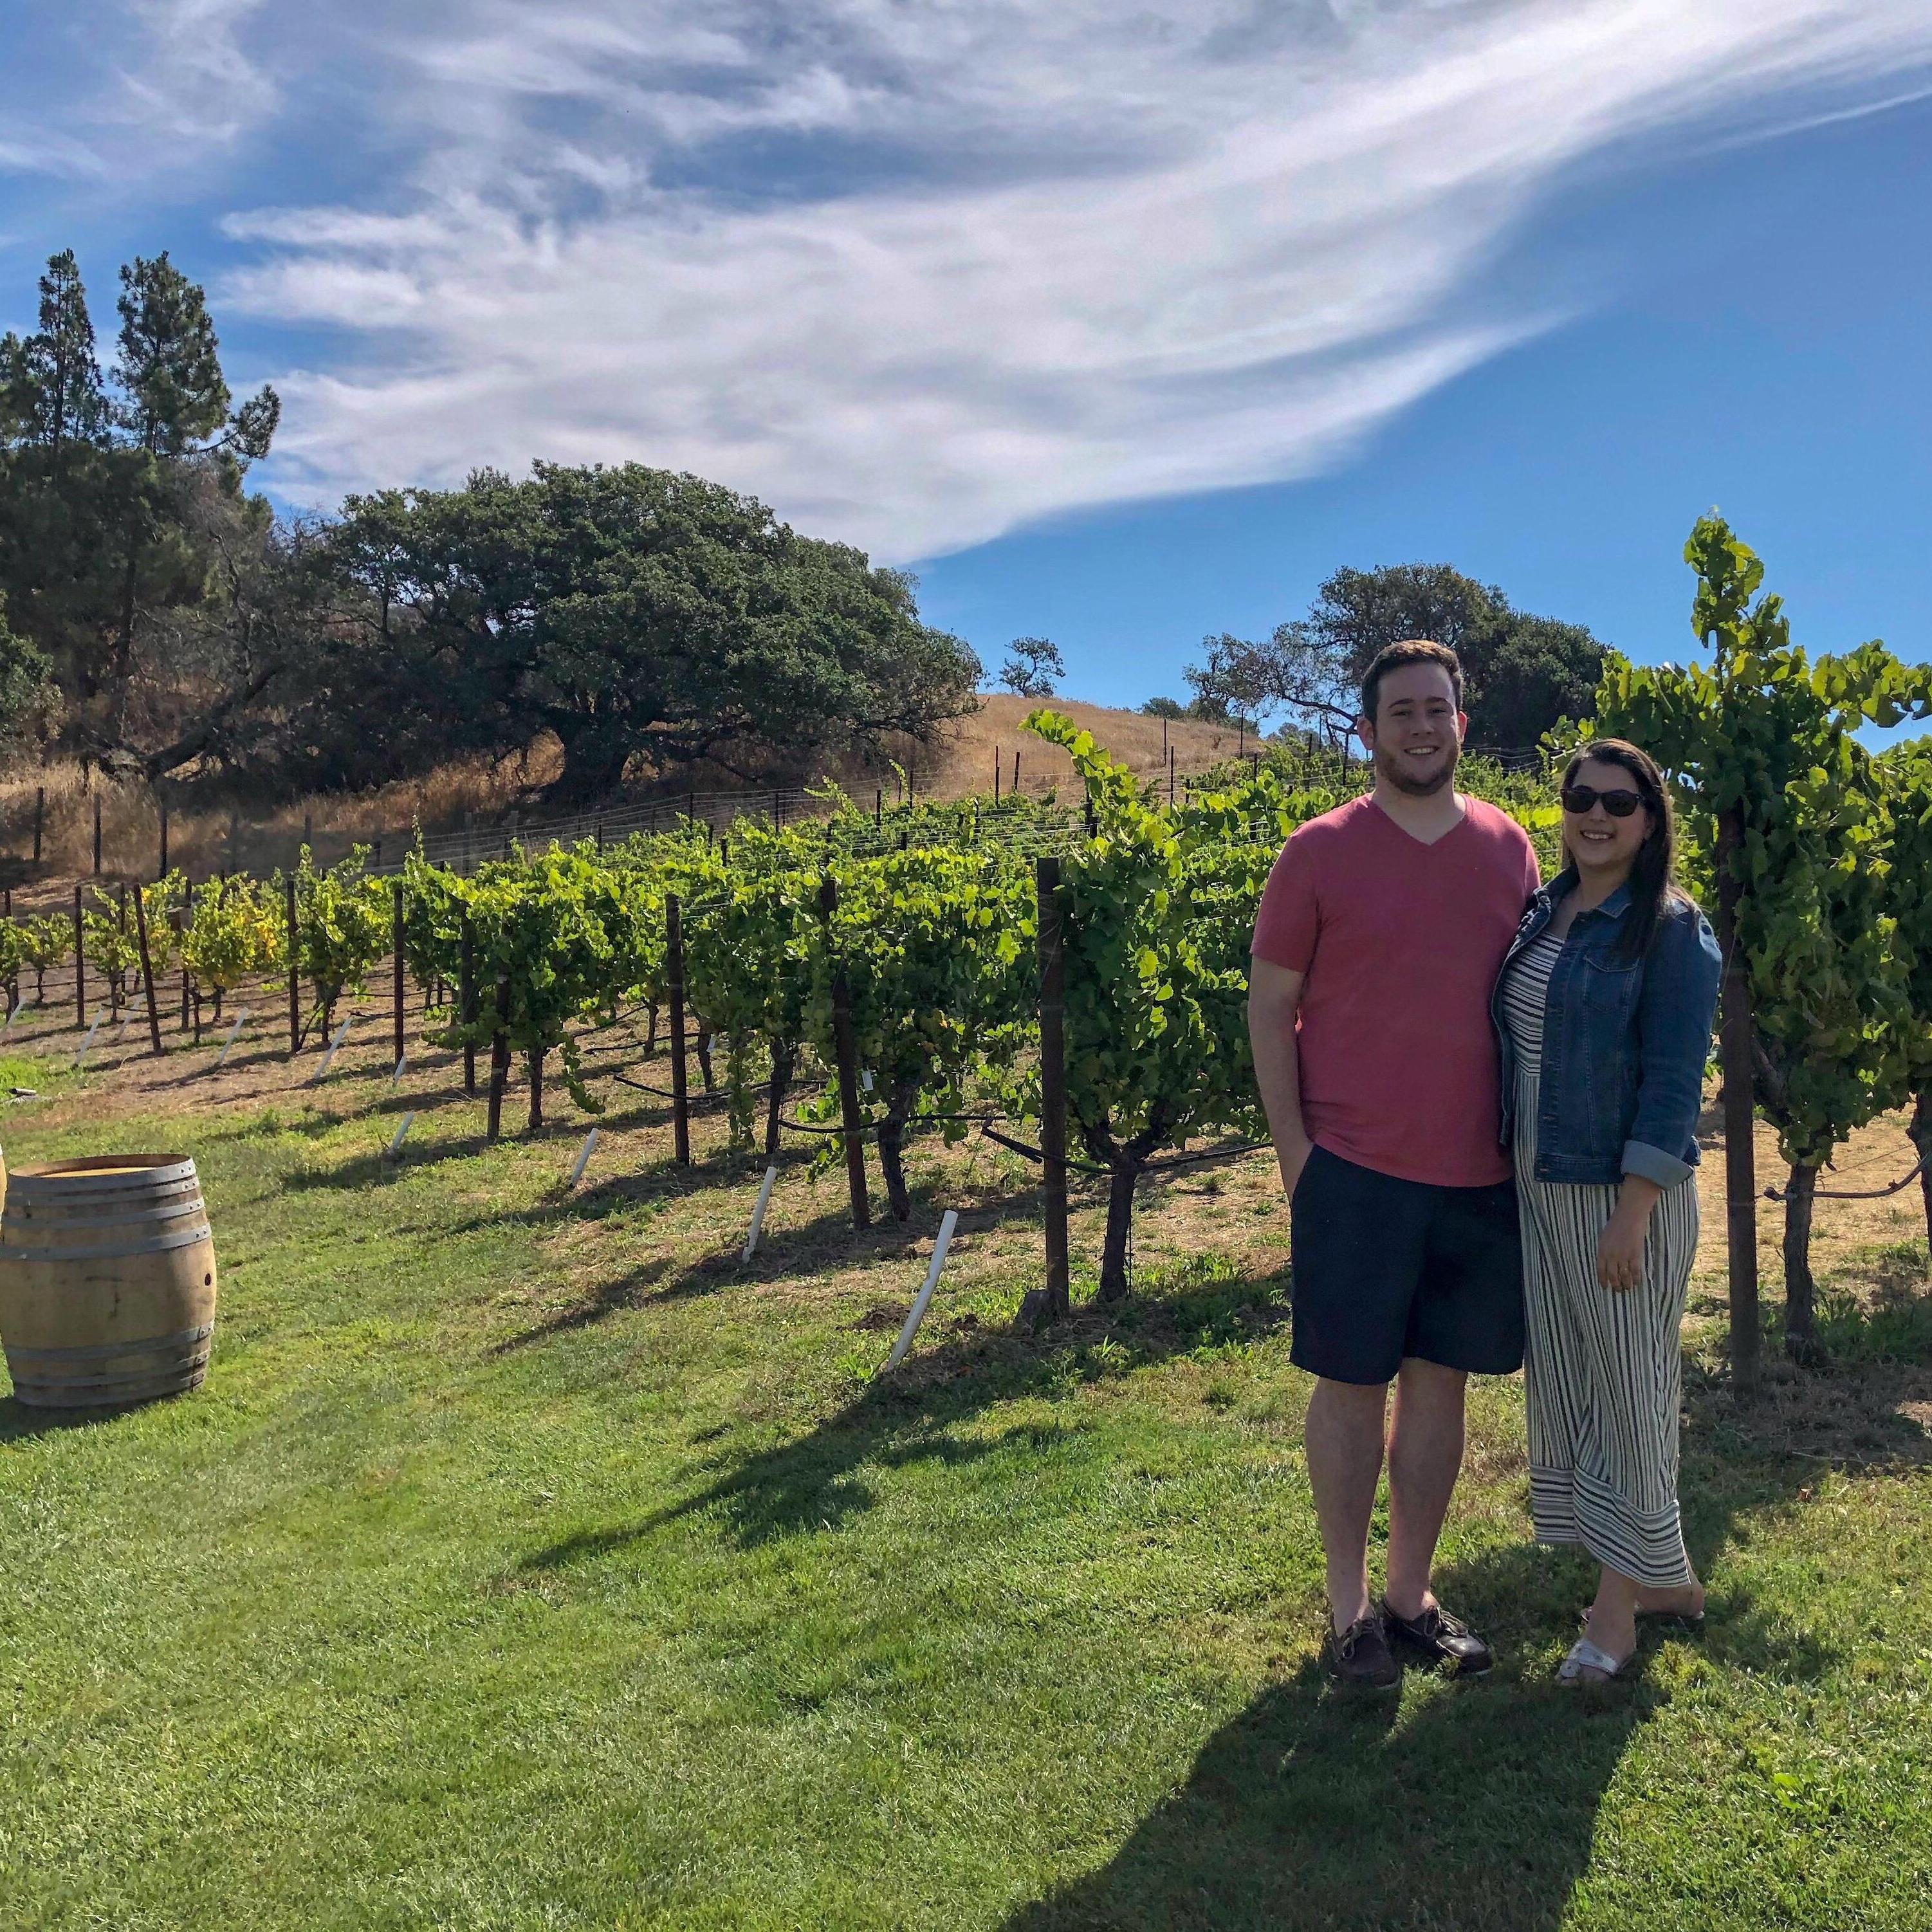 Nicholson Ranch Winery in Sonoma, California 2018